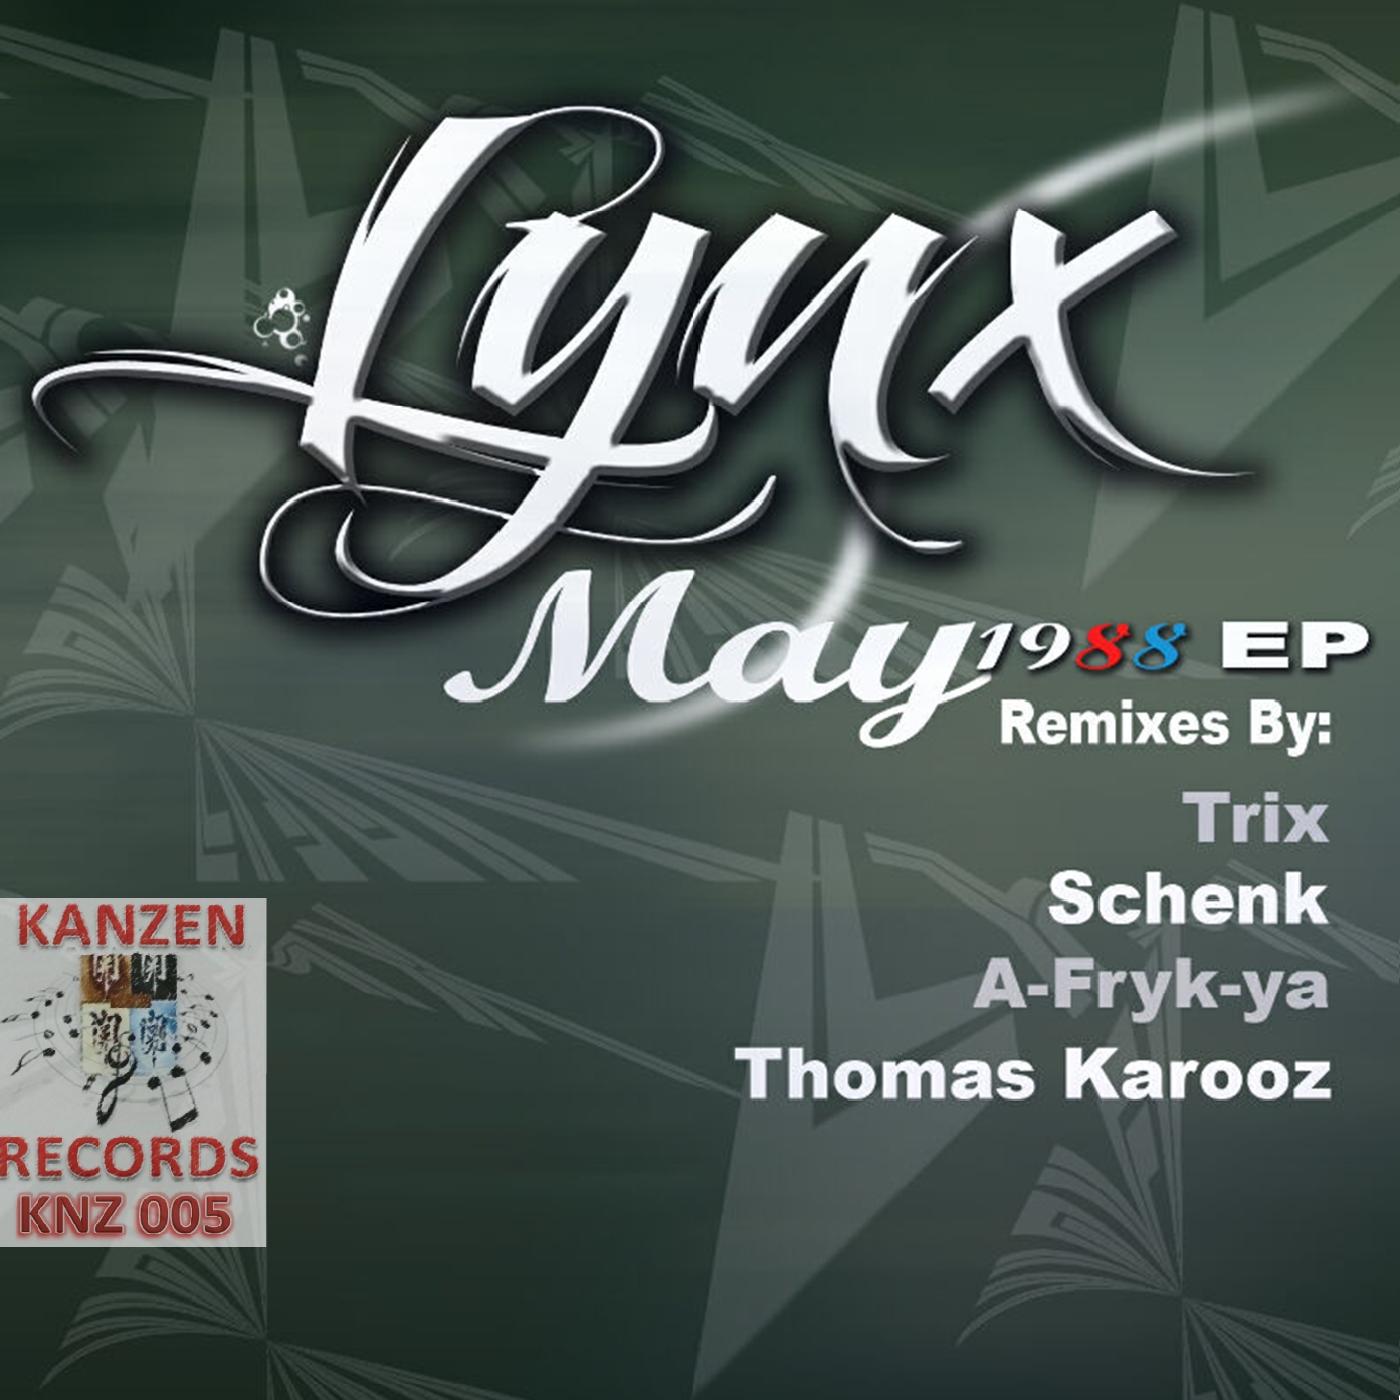 Lynx - May 1988 EP